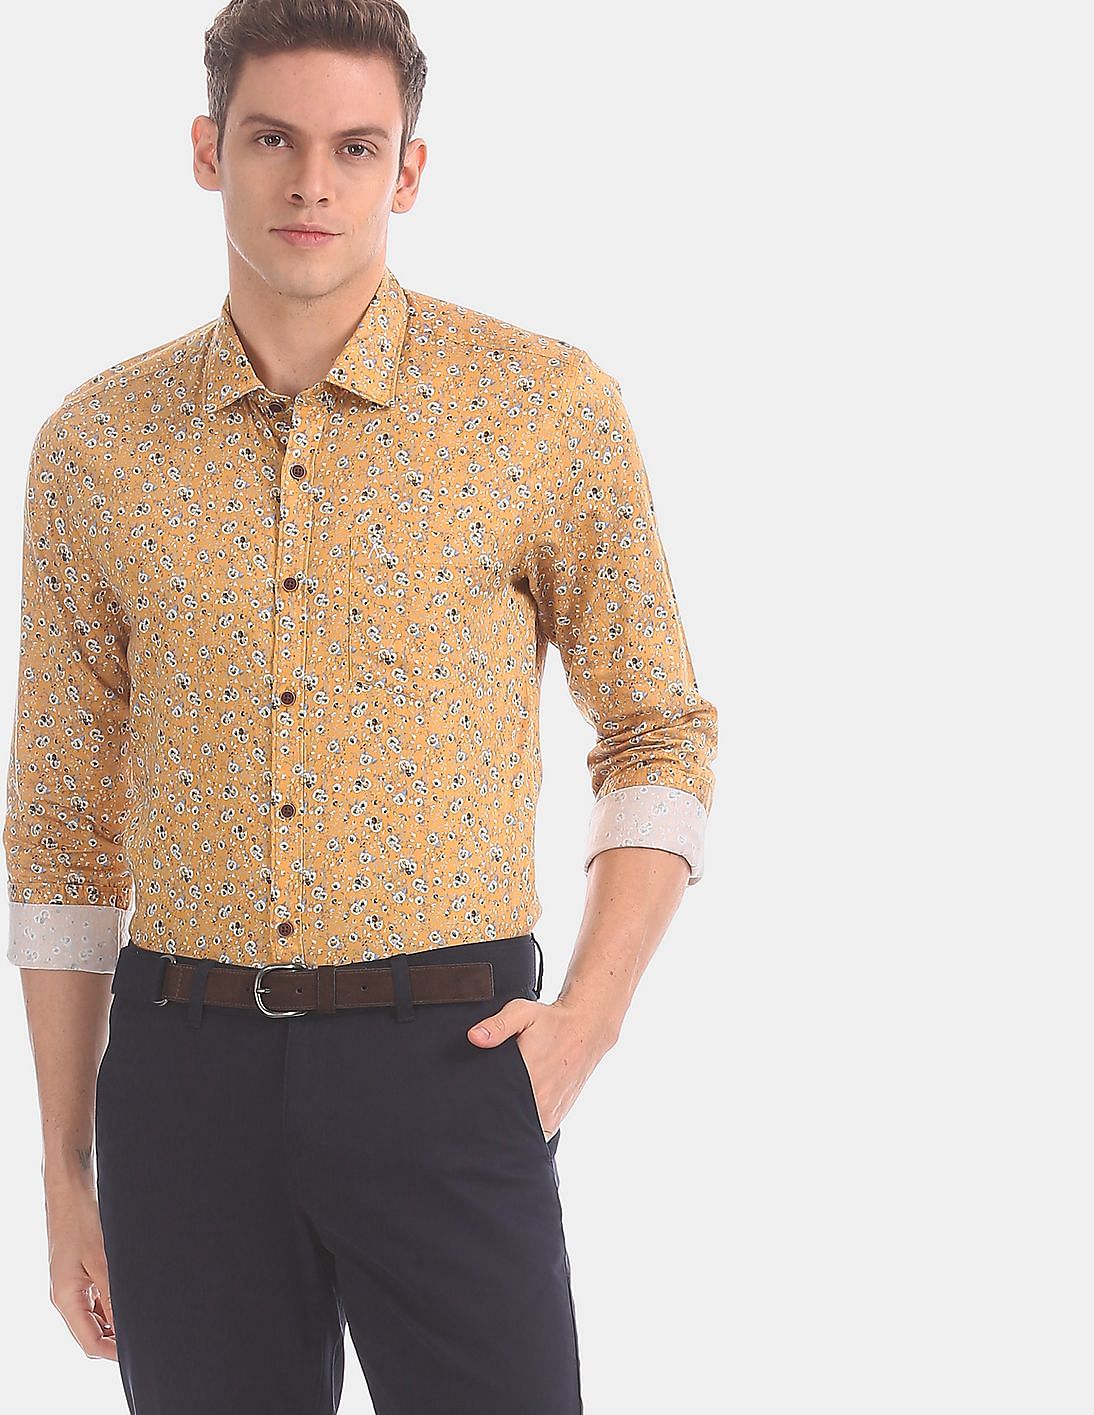 Buy Arvind Men Men Mustard Floral Print Cotton Casual Shirt - NNNOW.com